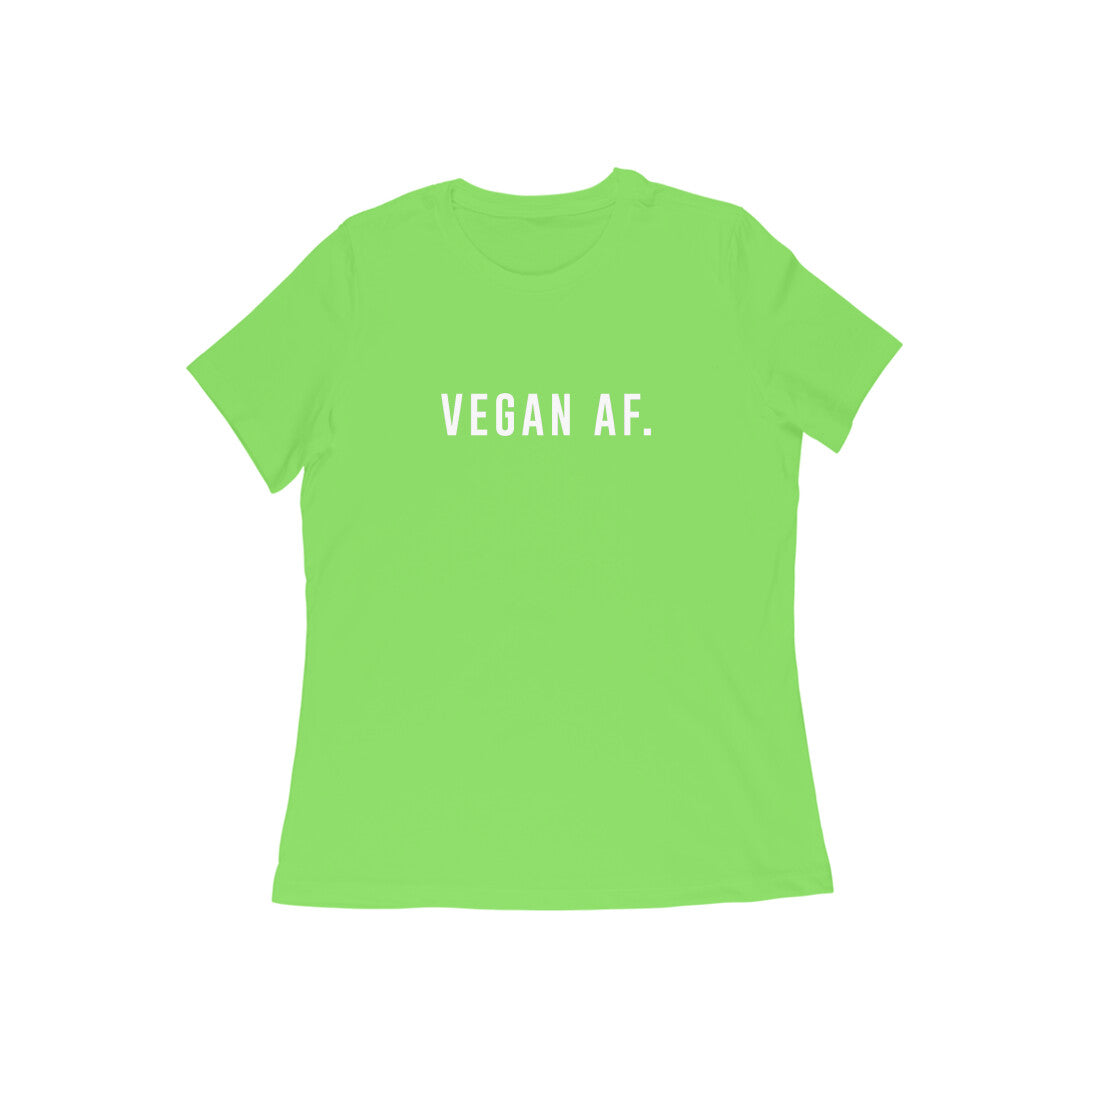 Vegan AF.  Vegan T-shirt